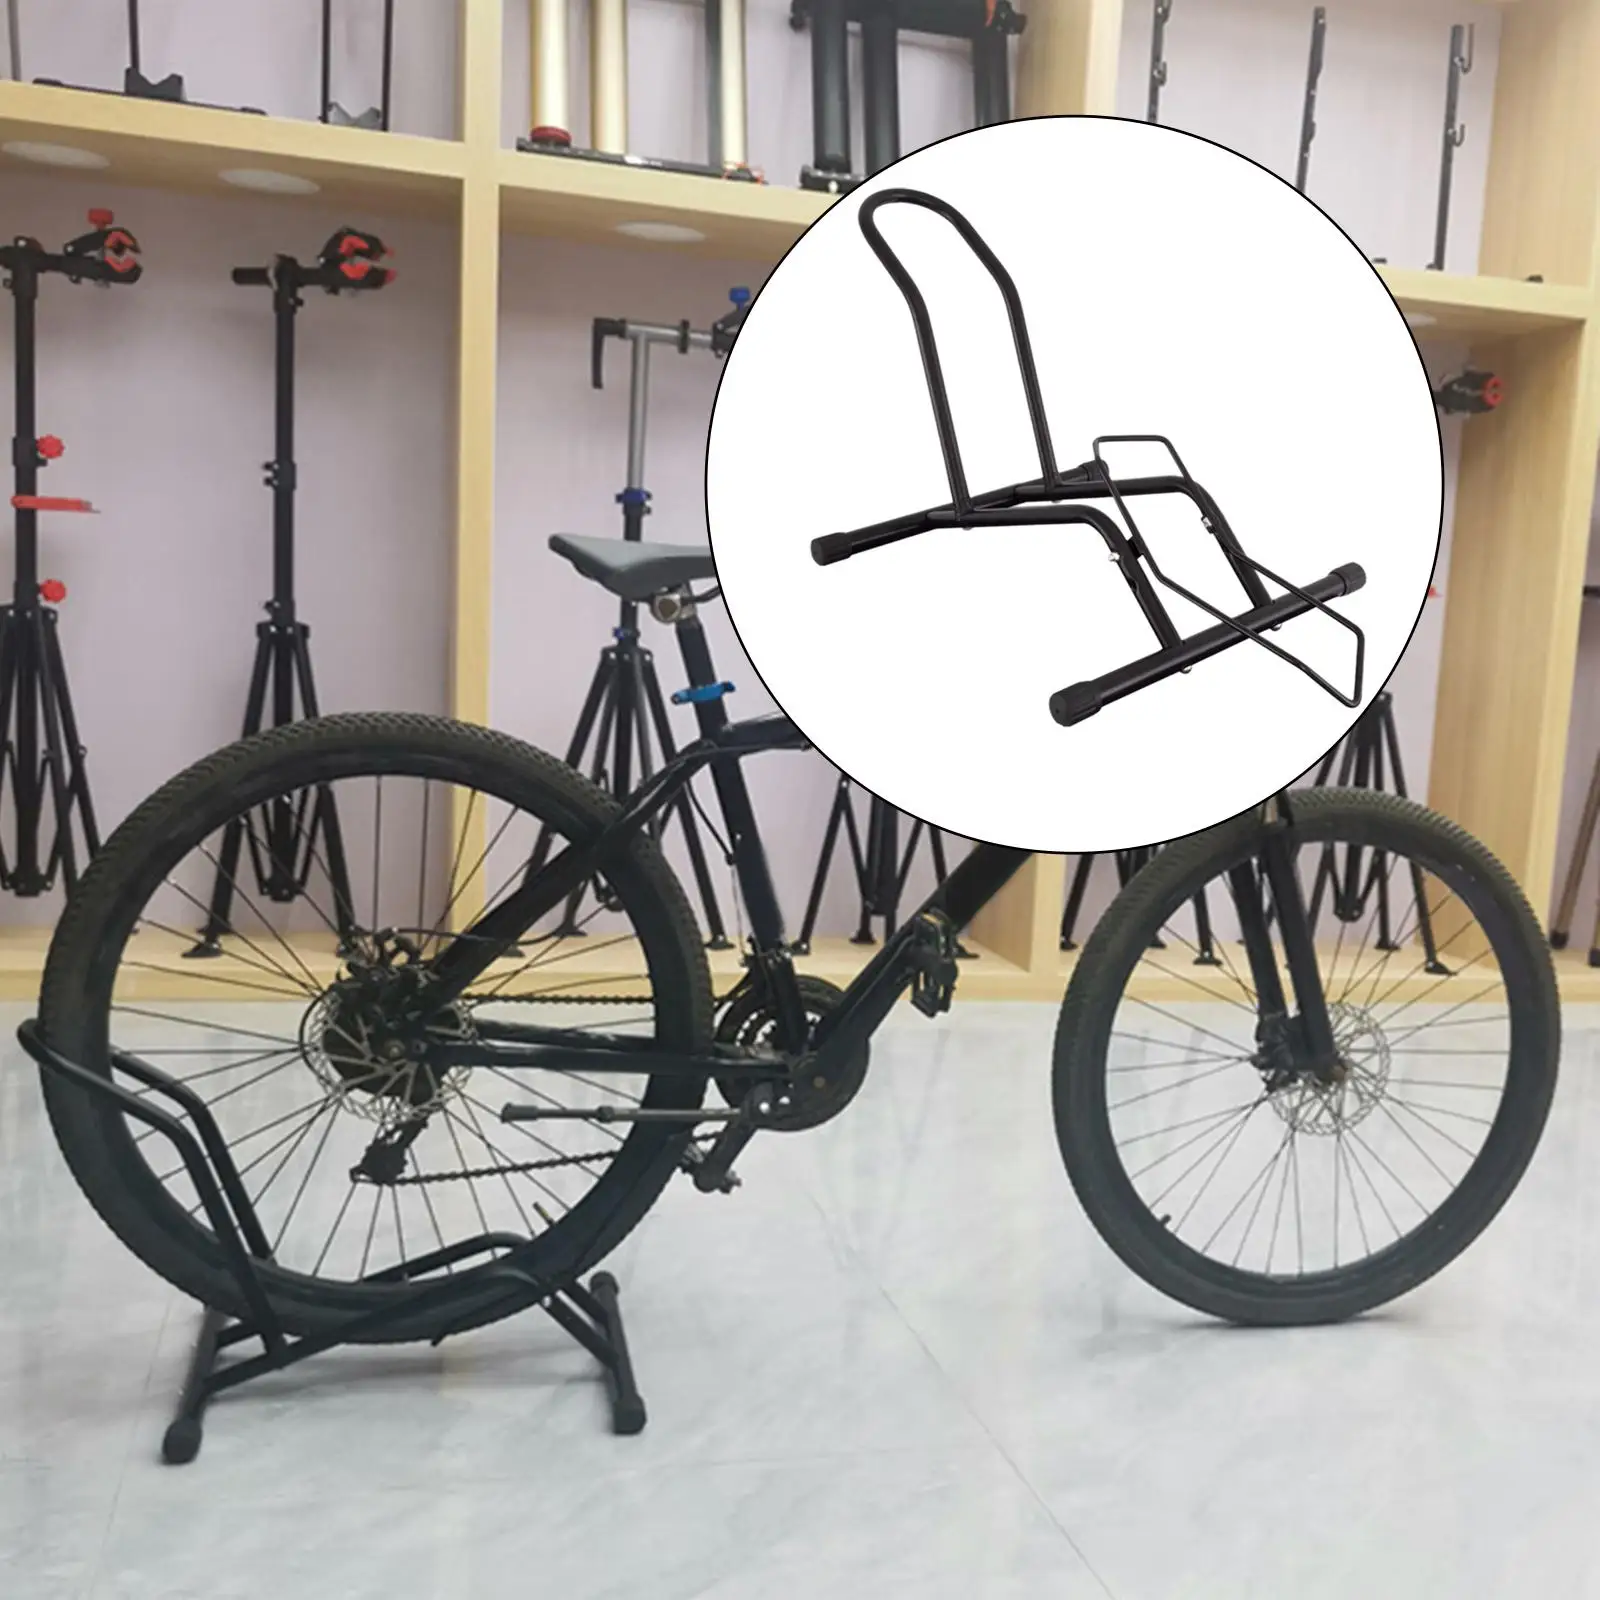 Portable Bicycle Floor Parking Rack Storage Stand Bike Holder for MTB Road Bike Indoor Outdoor